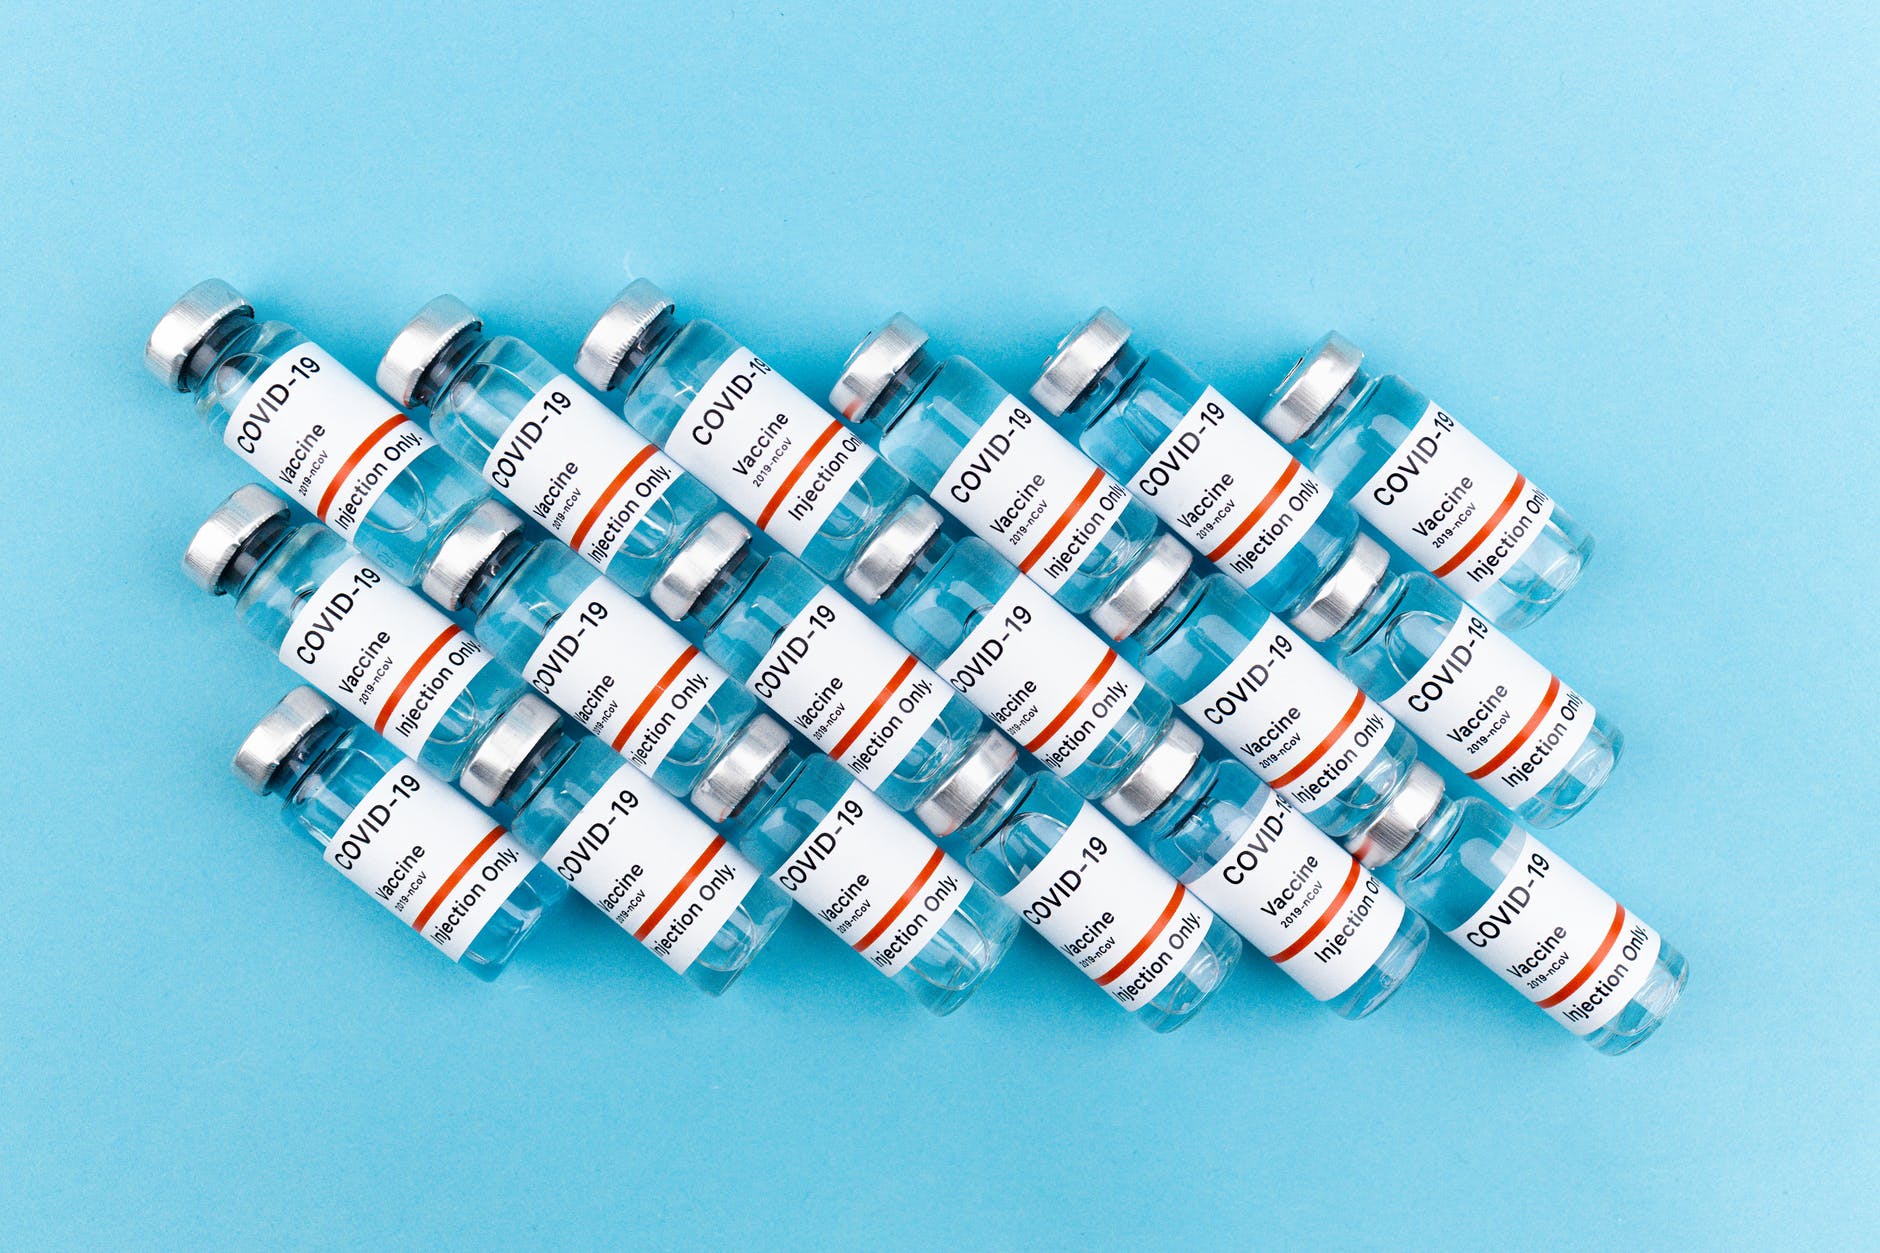 vaccine bottles on blue background